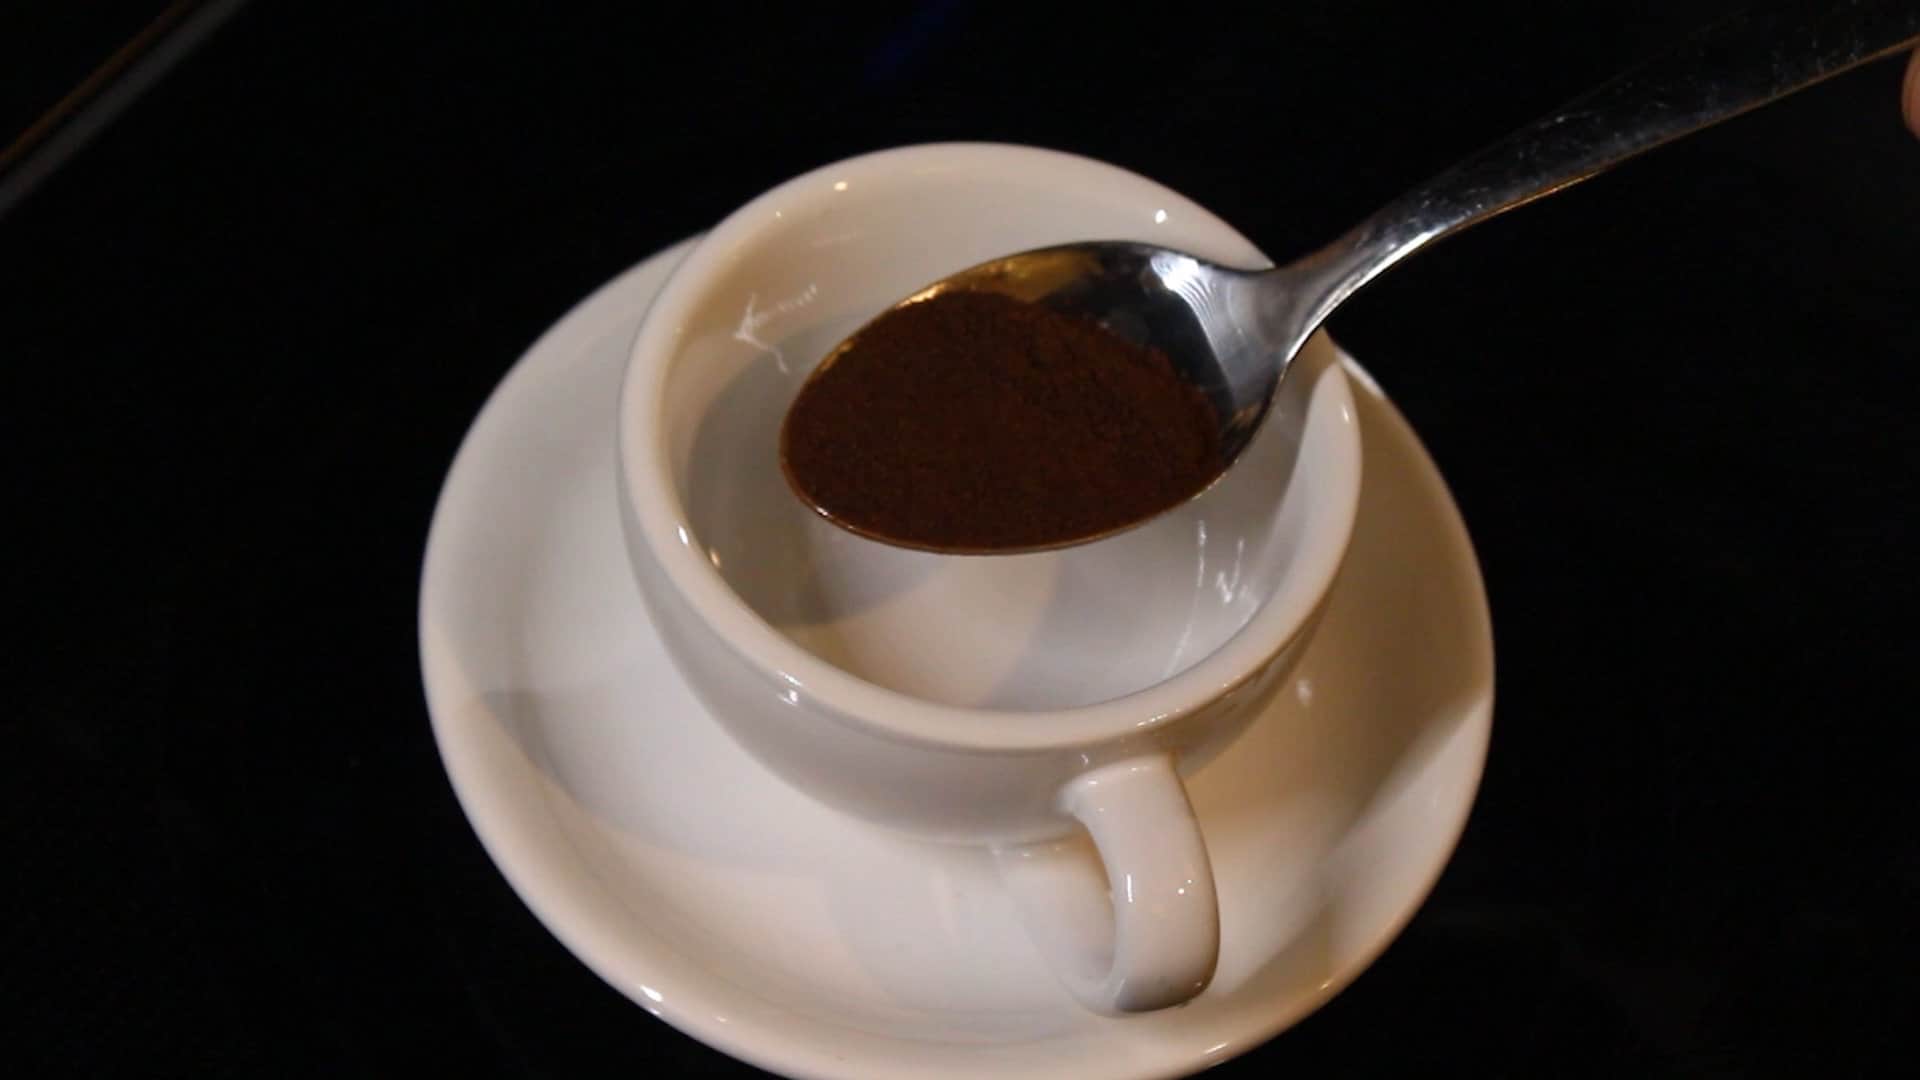 adding coffee powder in a plain white cup